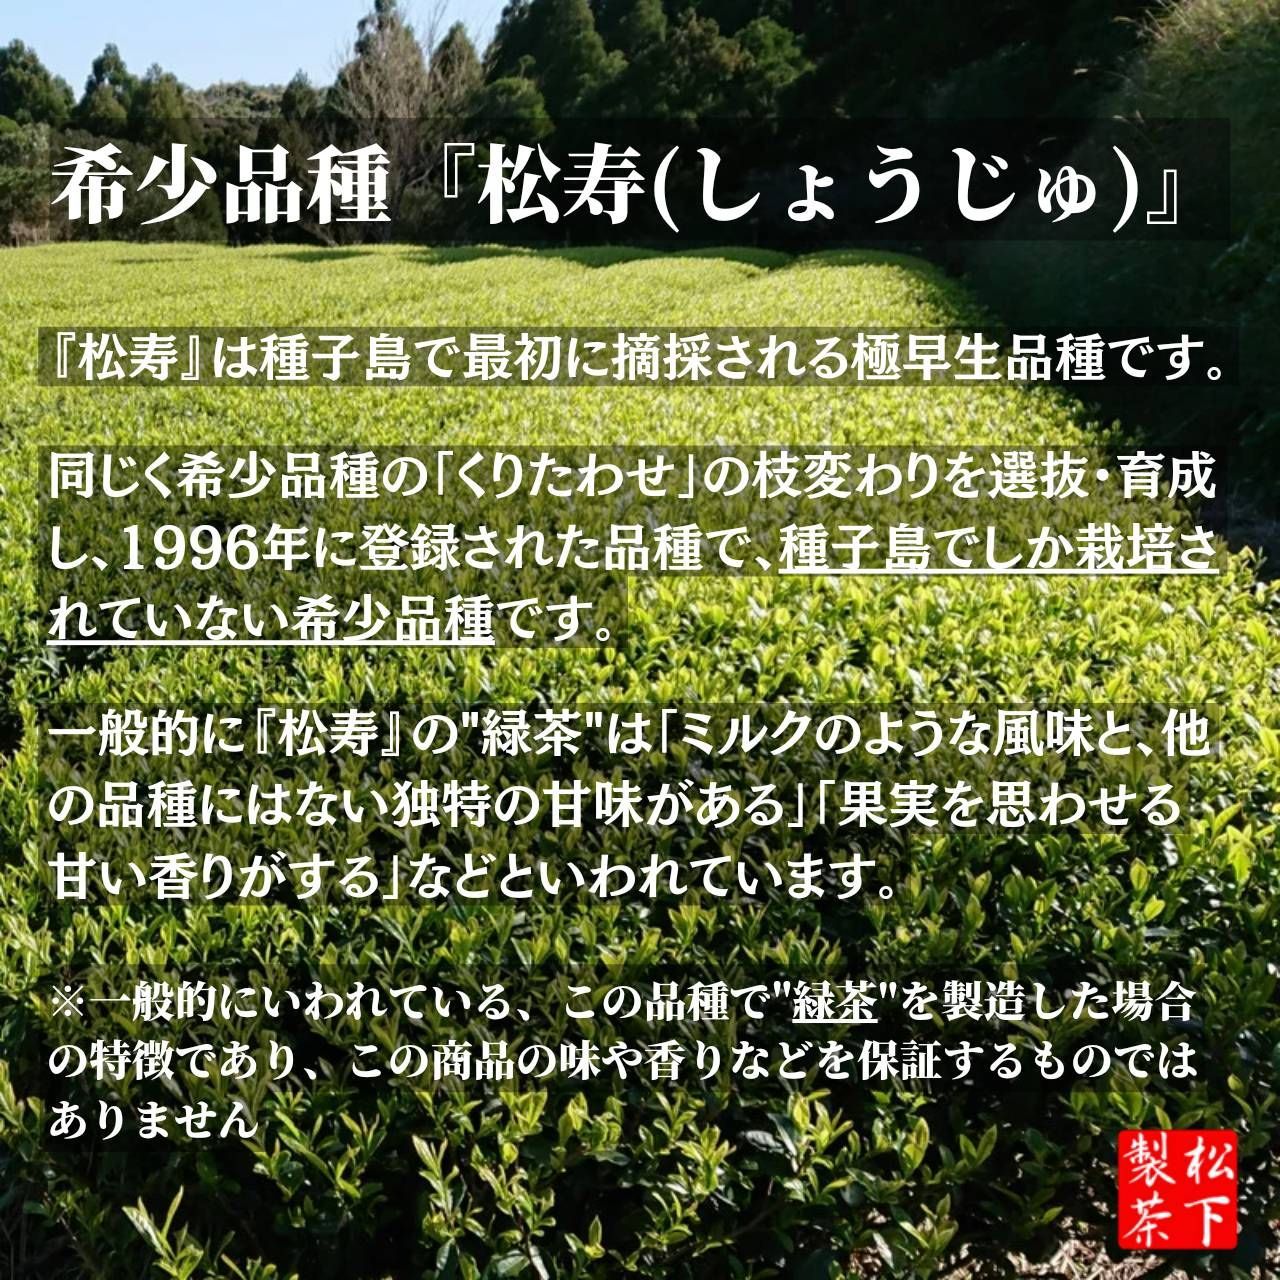 【2022年産/希少品種】種子島の有機緑茶『松寿』 茶葉(リーフ) 100g-3